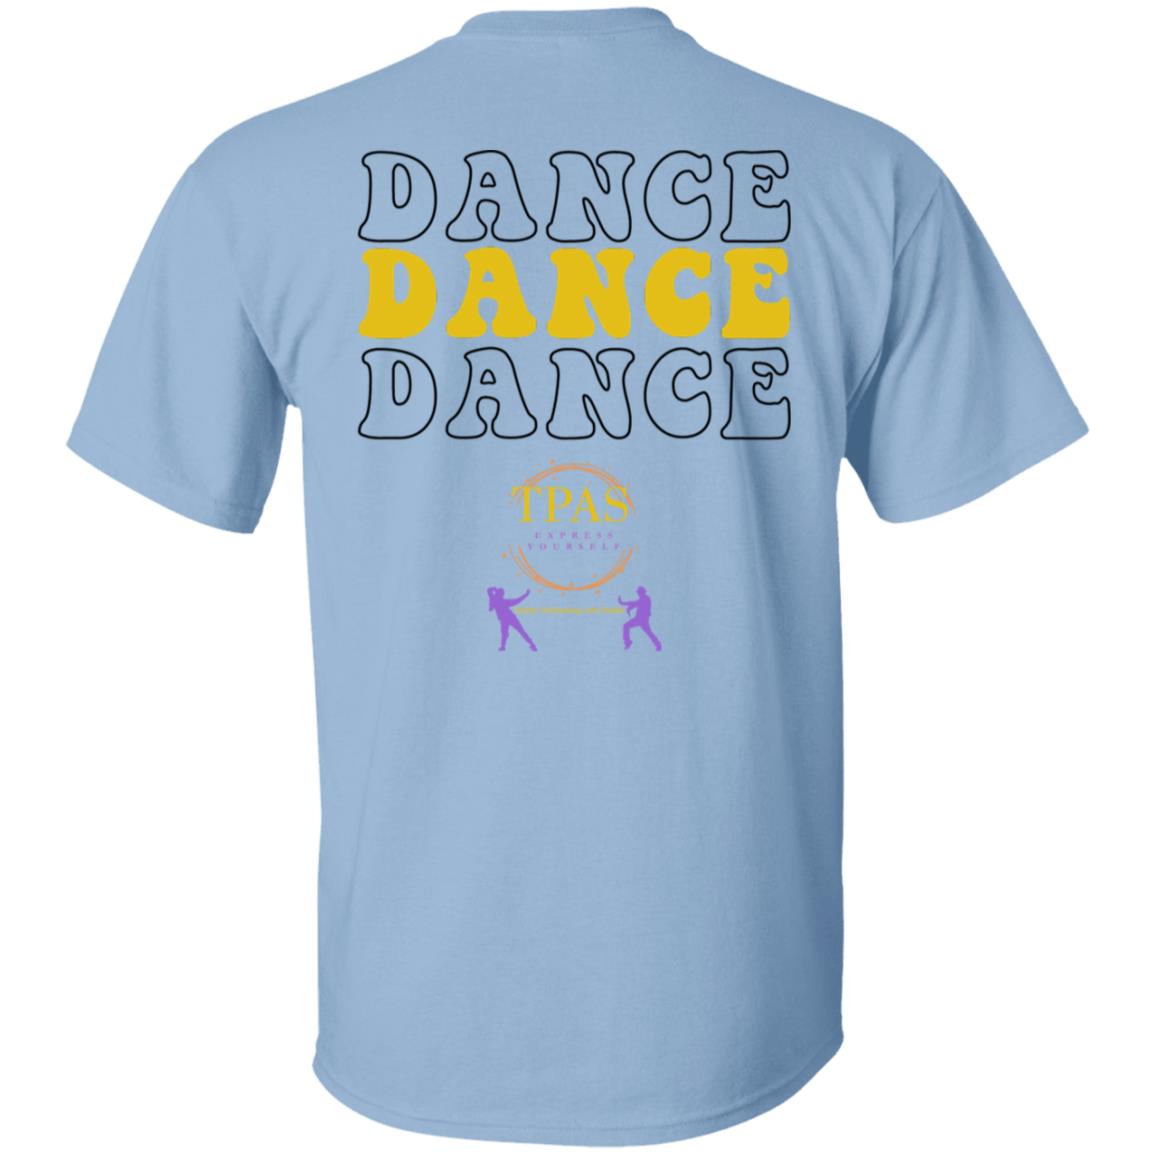 TPAS Dance, Dance, Dance, 100% Cotton T-Shirt